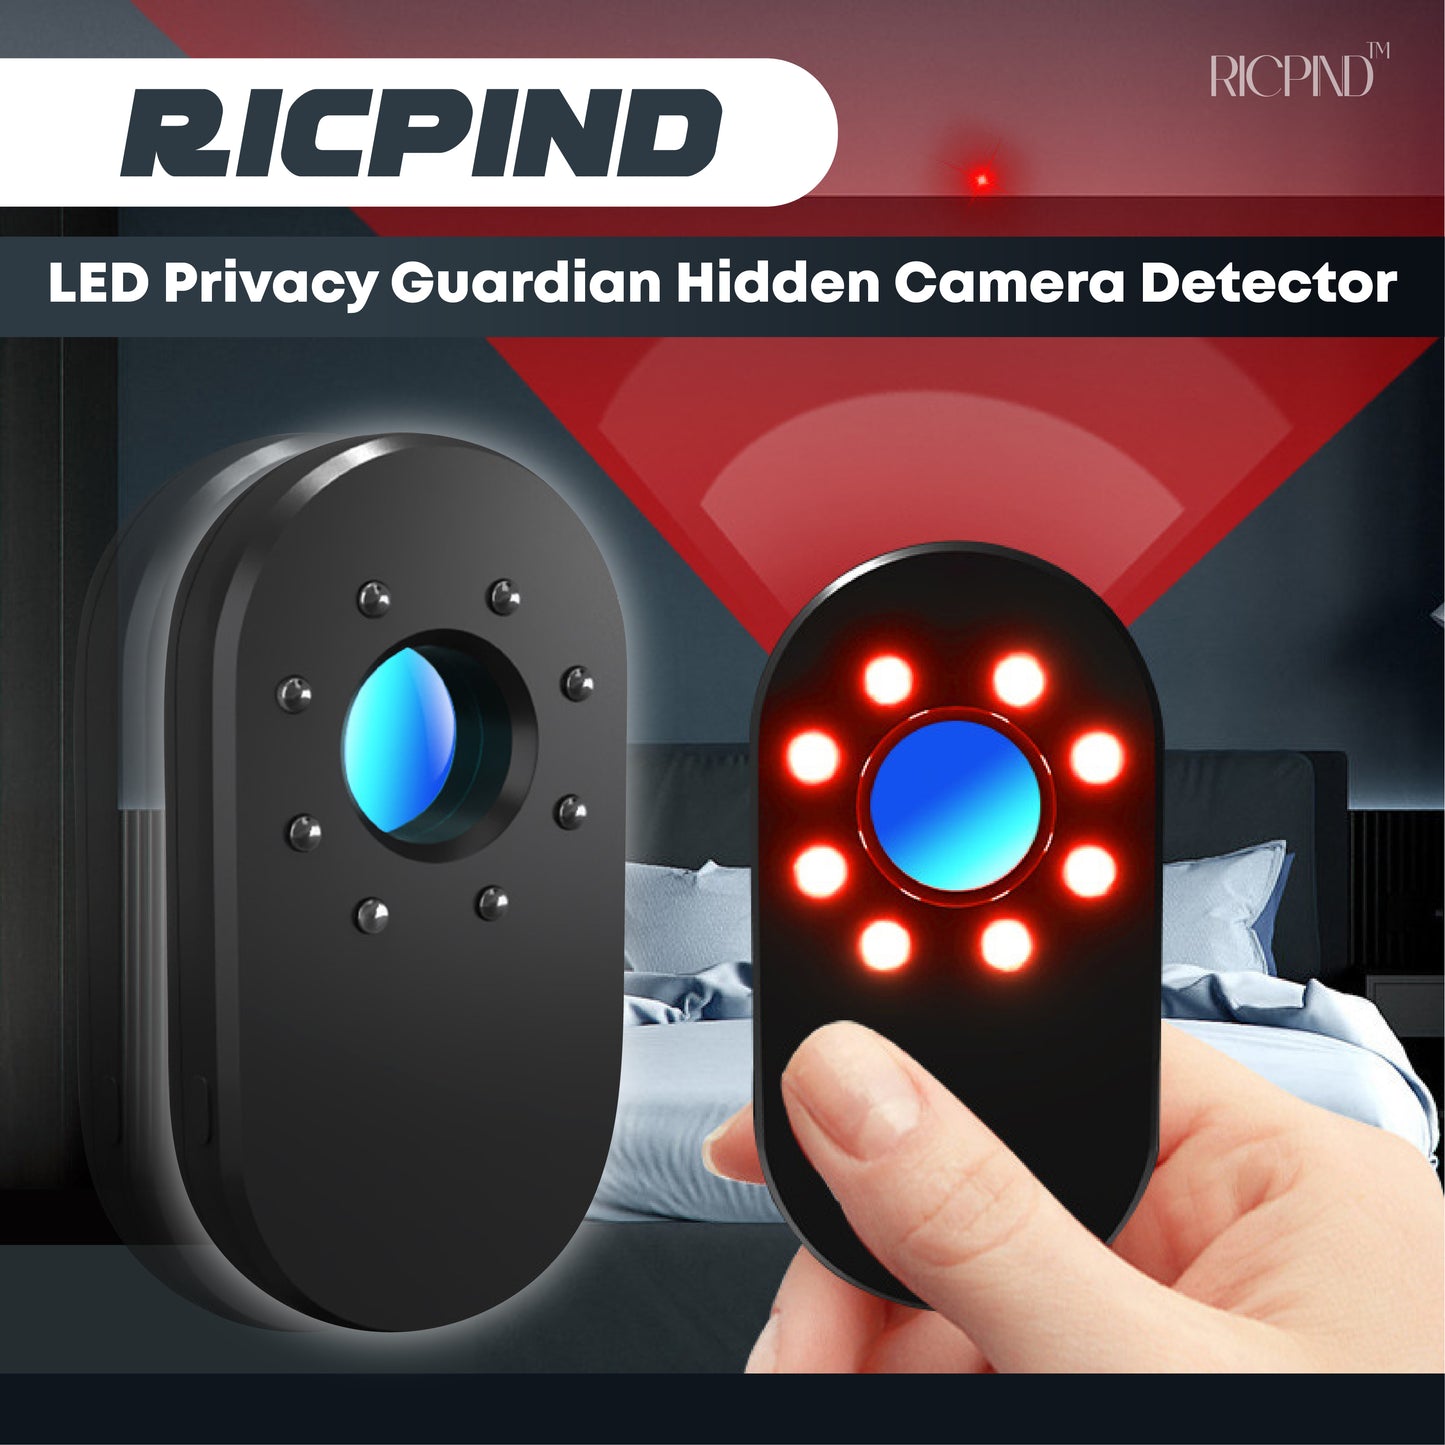 RICPIND LED Privacy Guardian Hidden Camera Detector